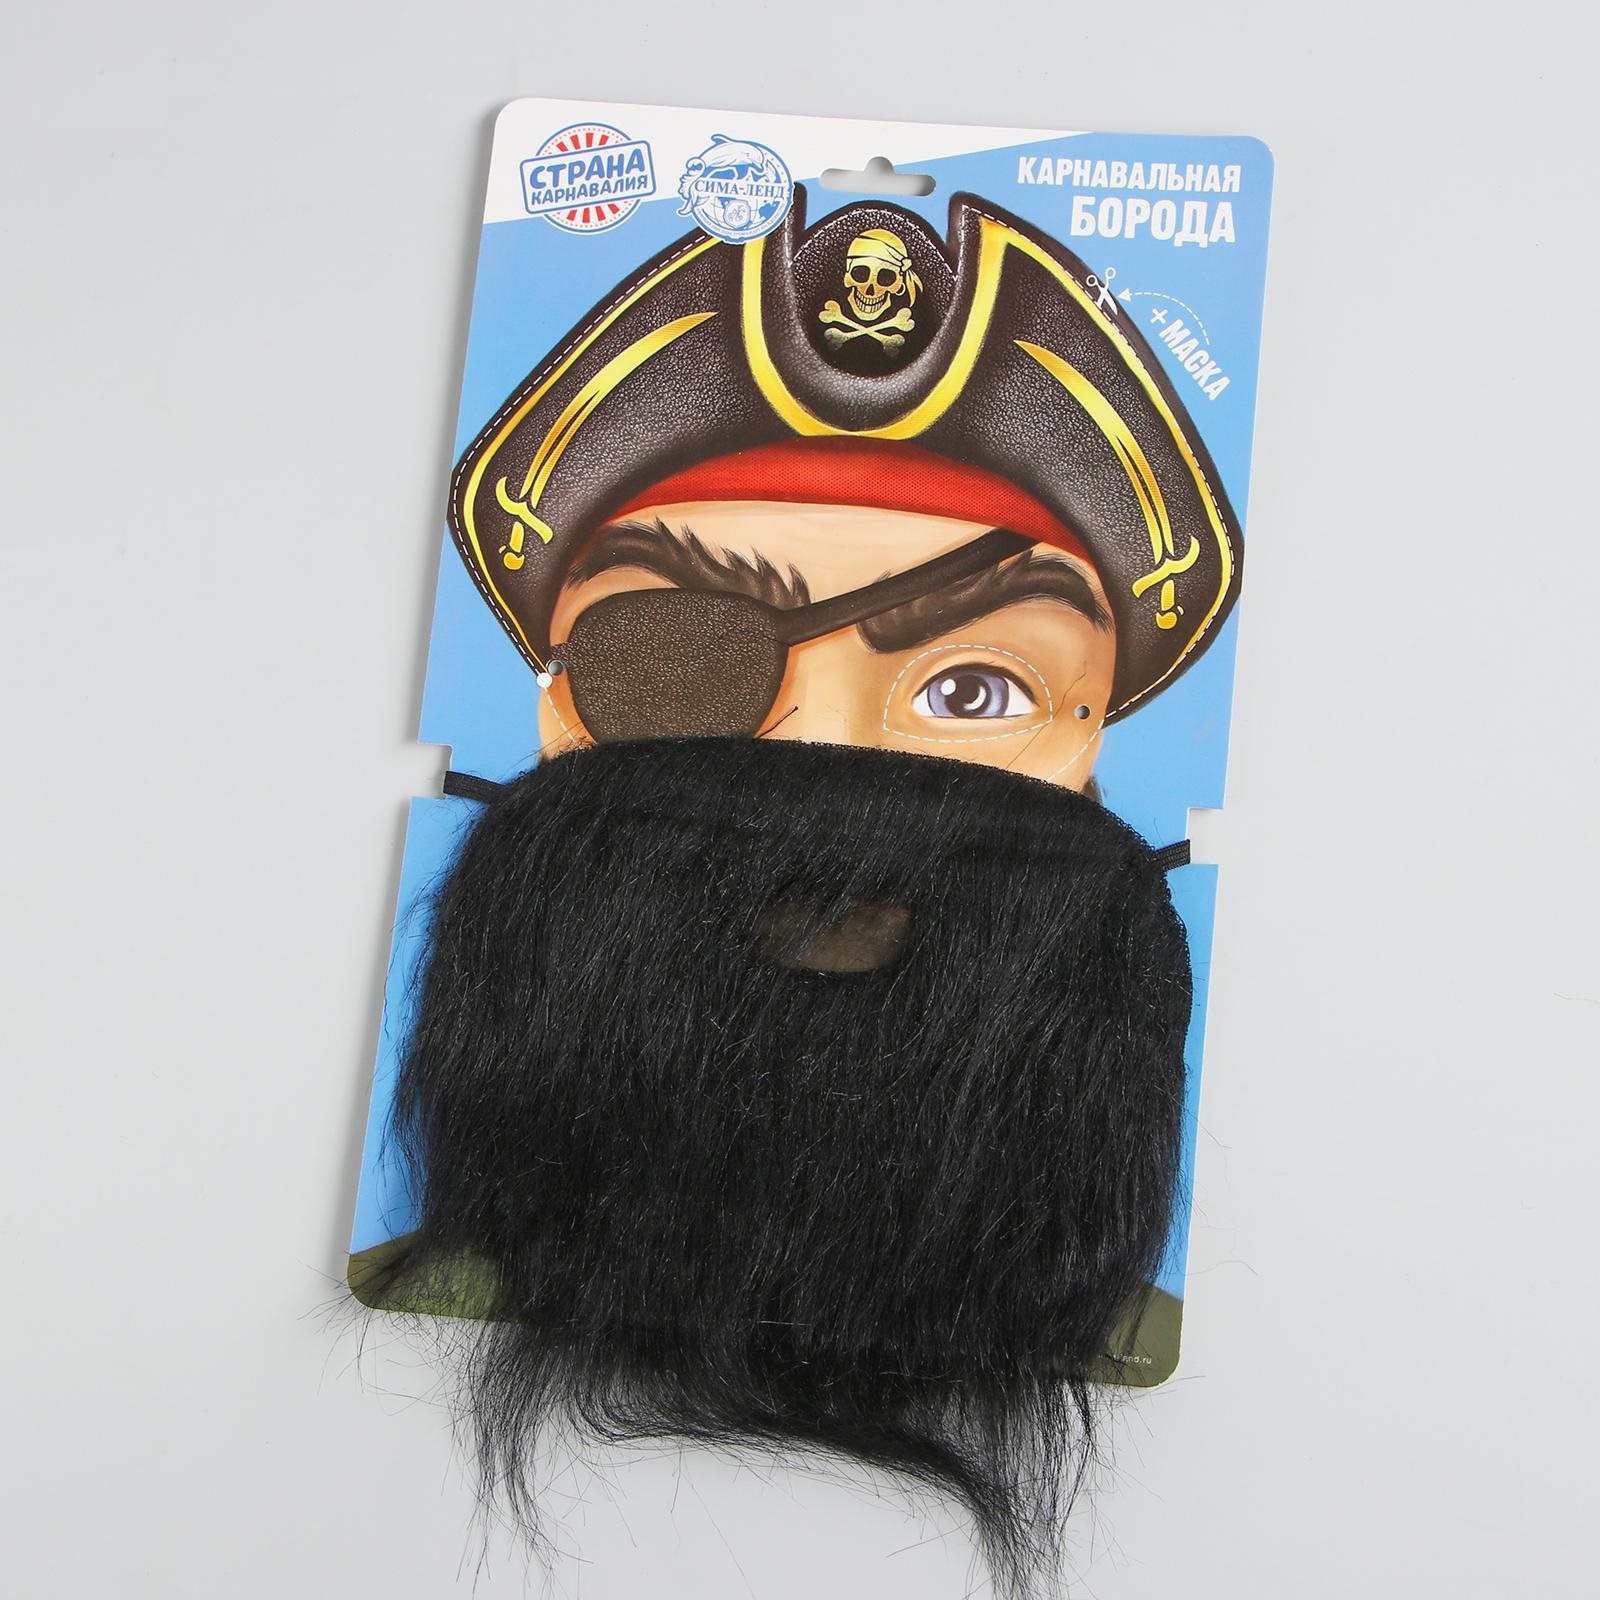 Борода Для настоящего пирата + маска/Сл